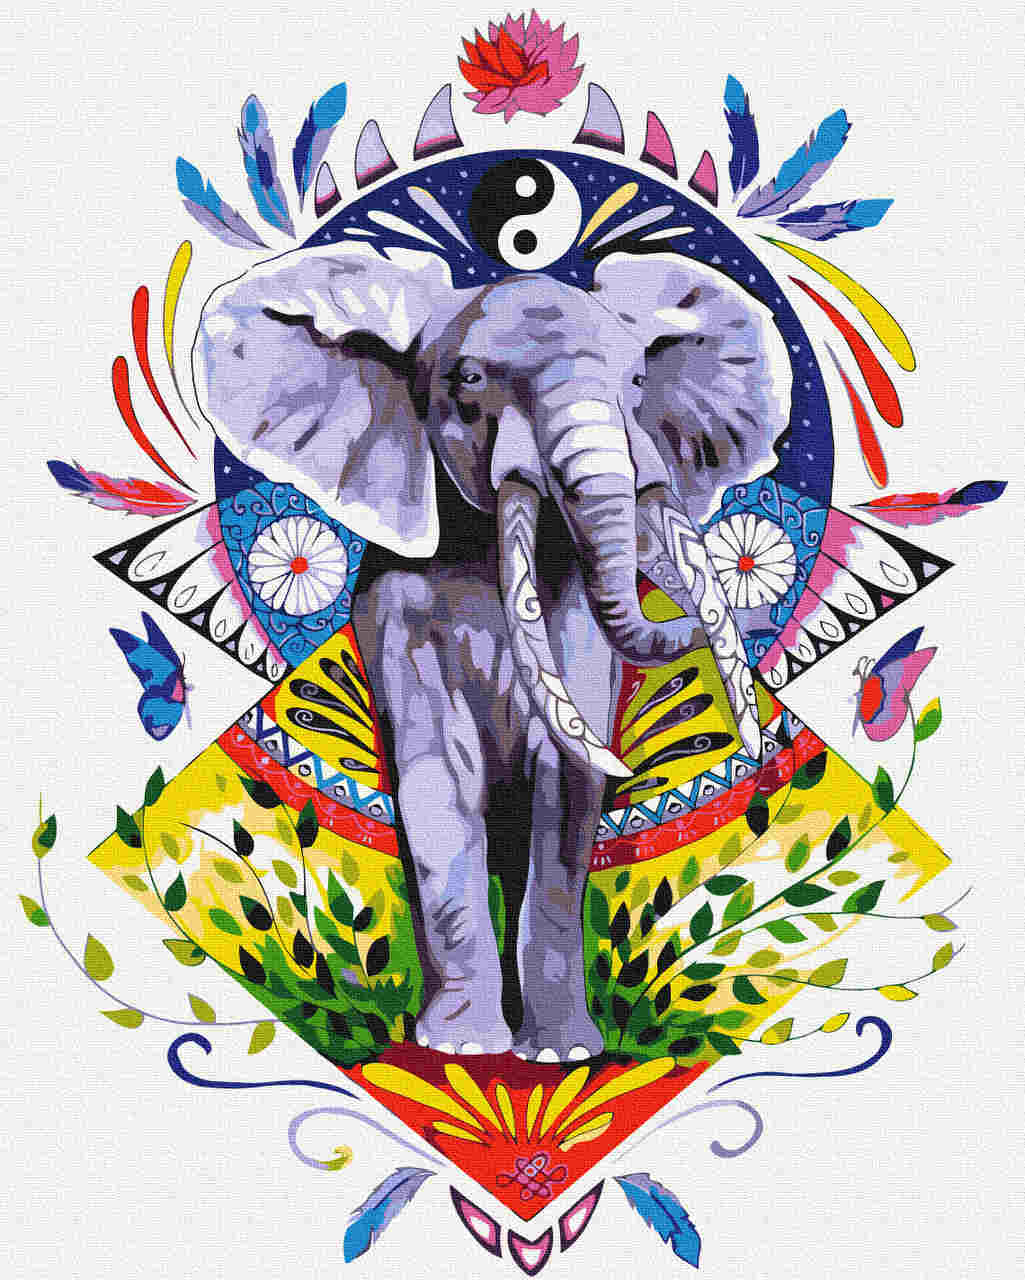 Malen nach Zahlen   life balance elefant   by Pixie Cold